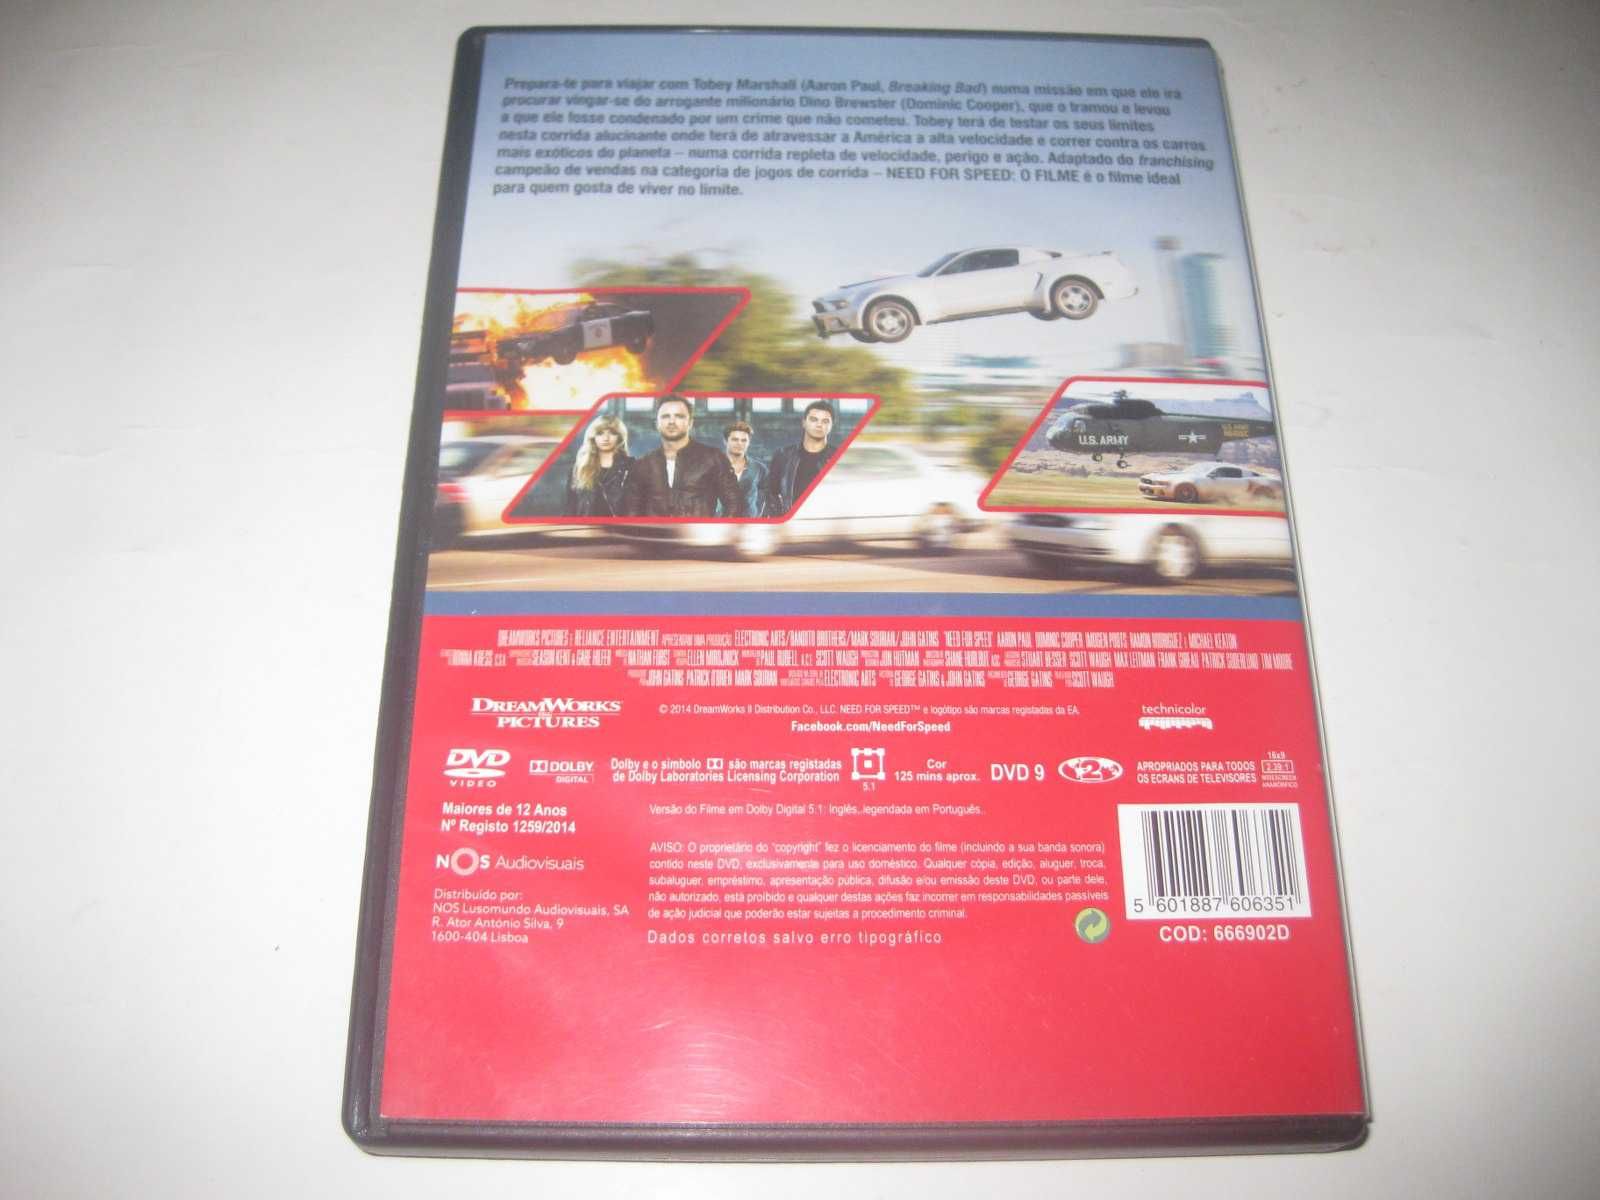 DVD "Need for Speed - O Filme" com Aaron Paul